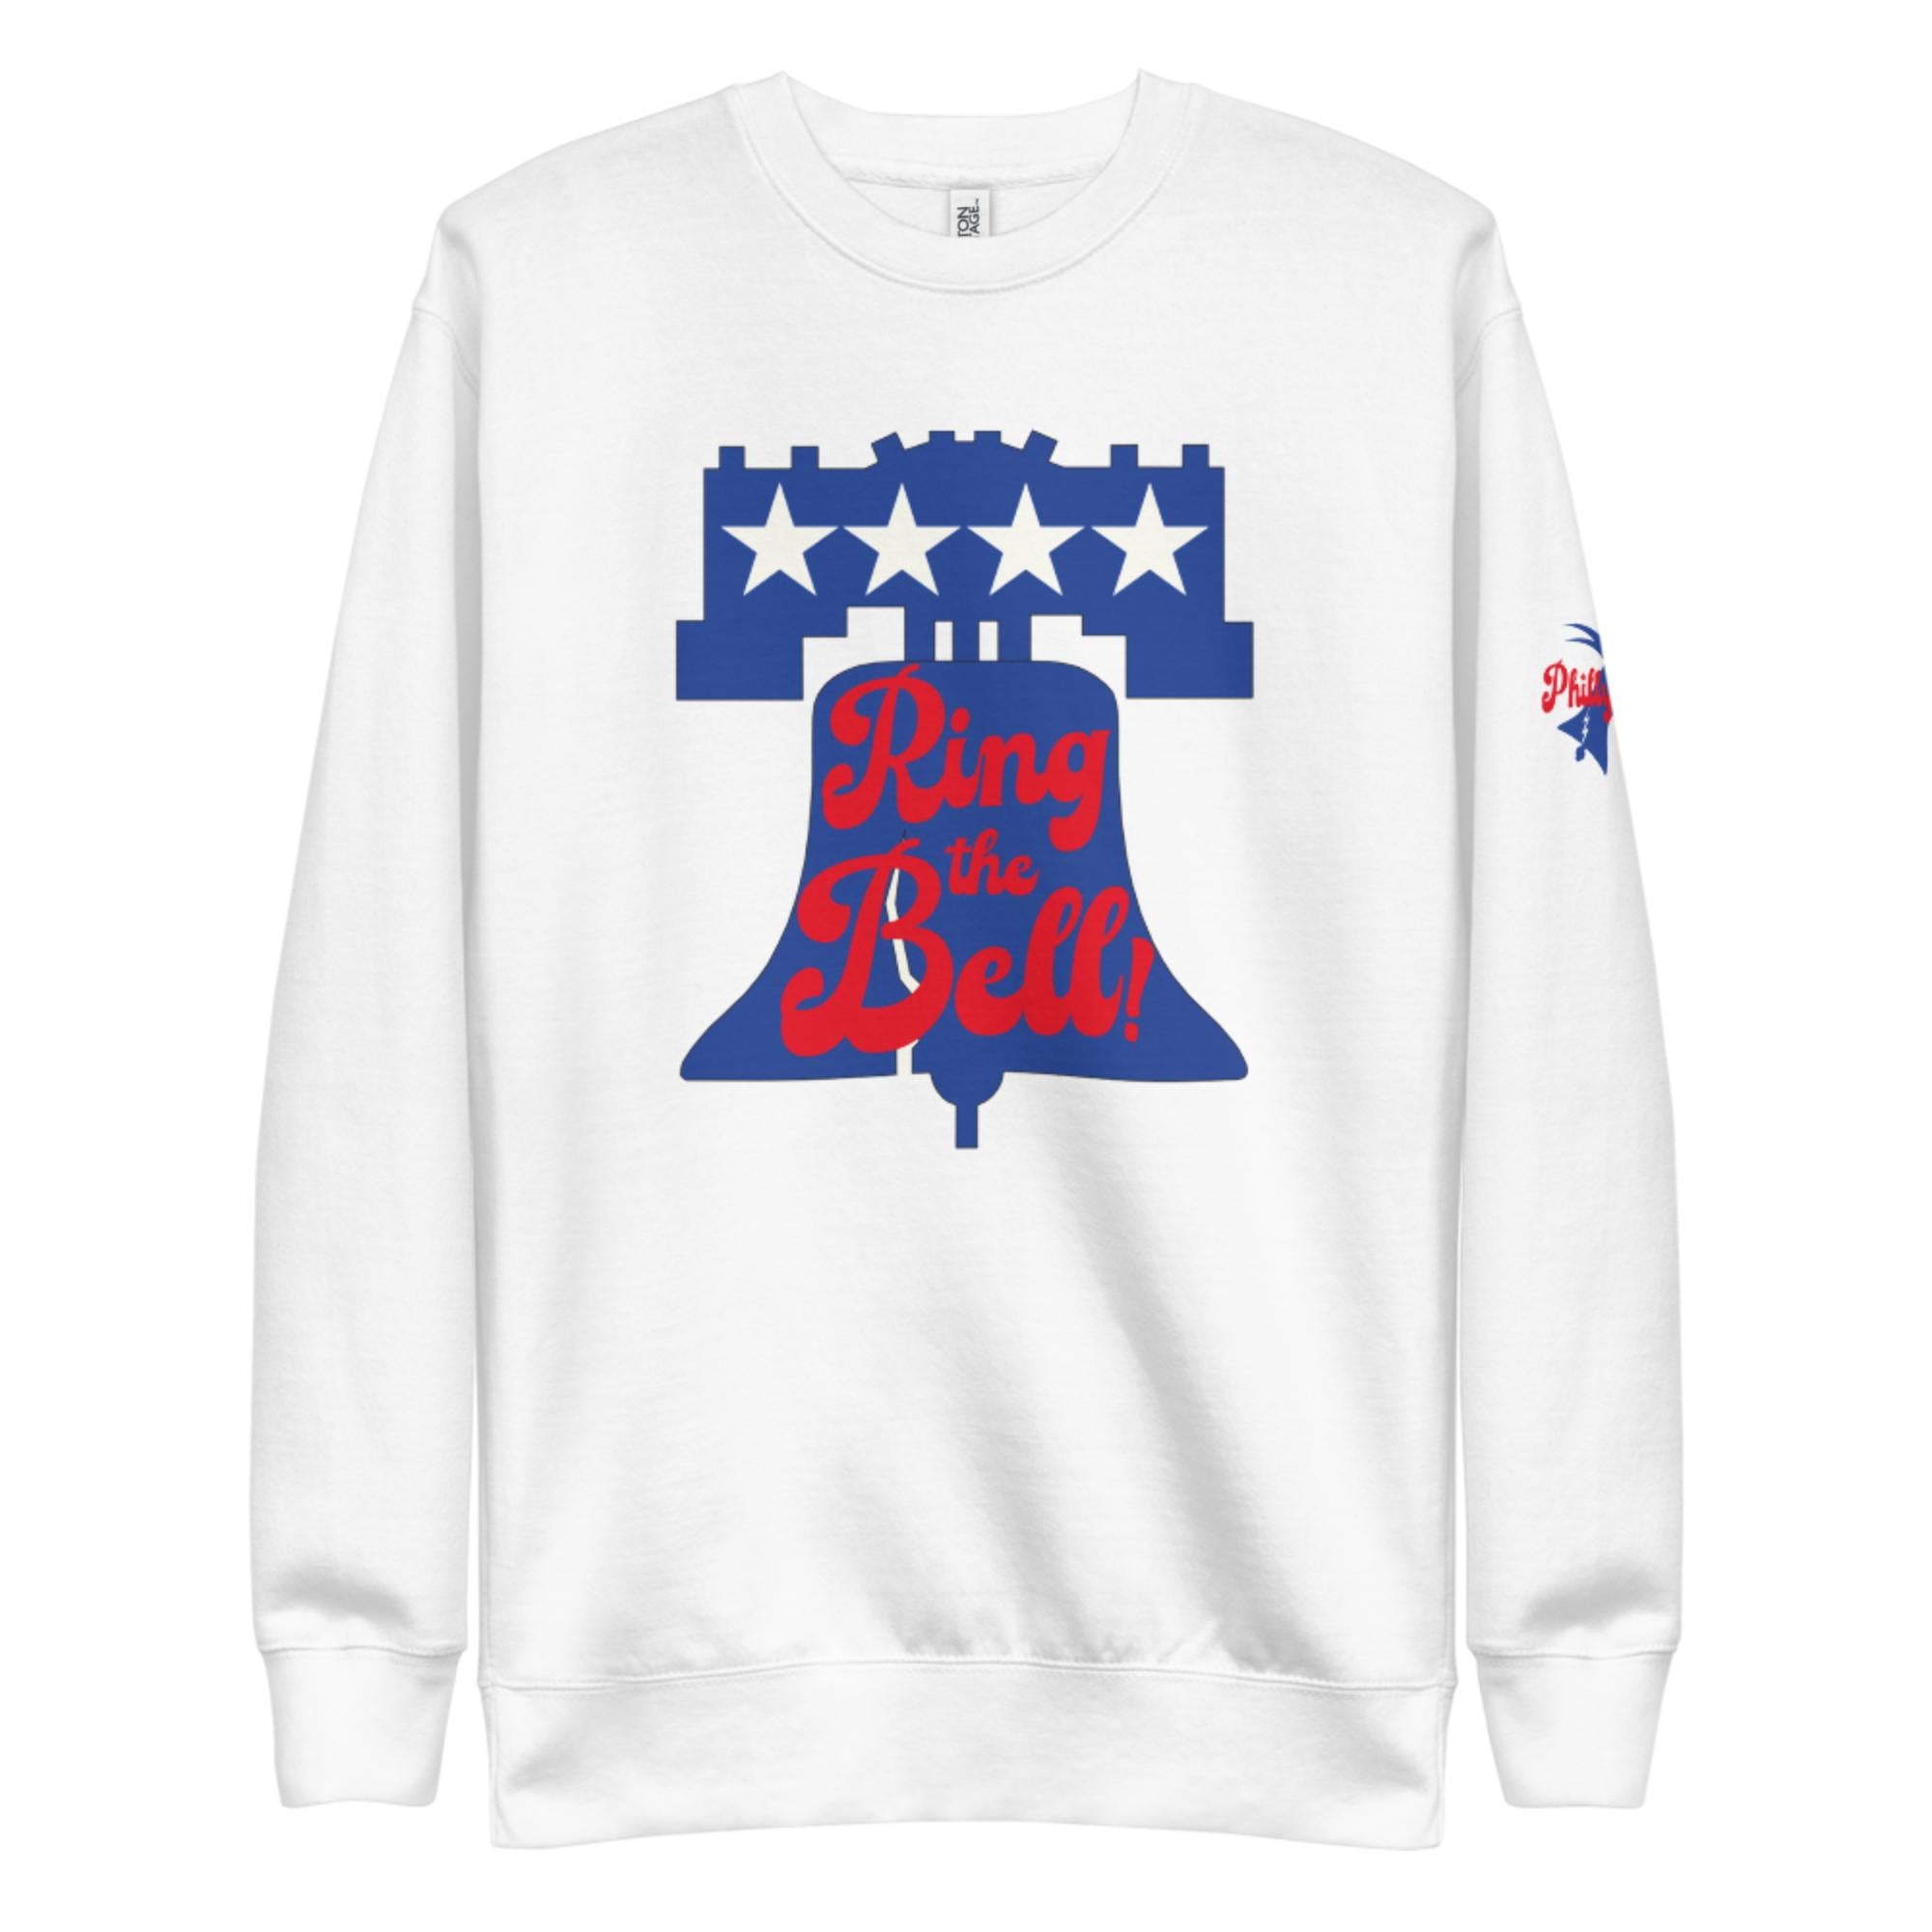 "Ring the Bell" Sweatshirt